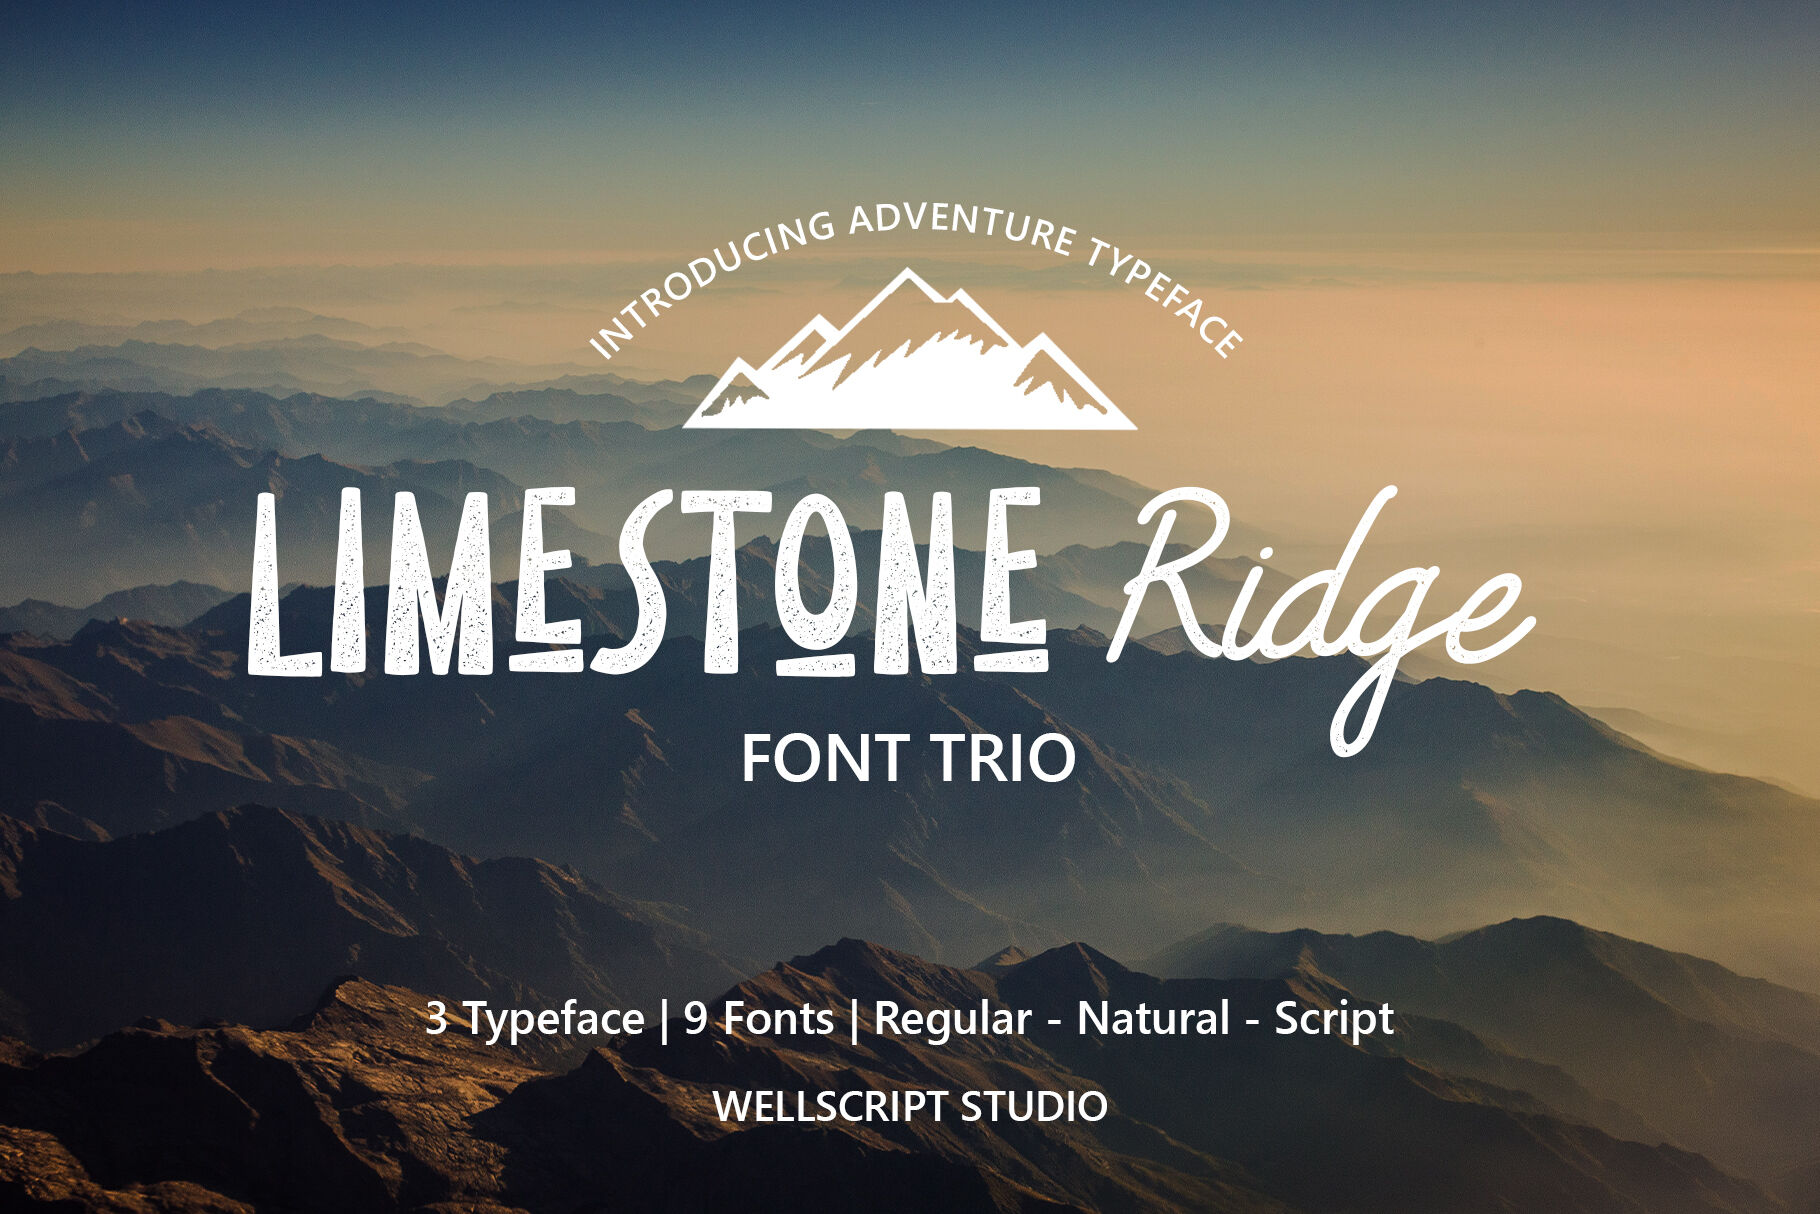 Limestone Ridge Trio Adventure Font By Wellscript Studio Thehungryjpeg Com